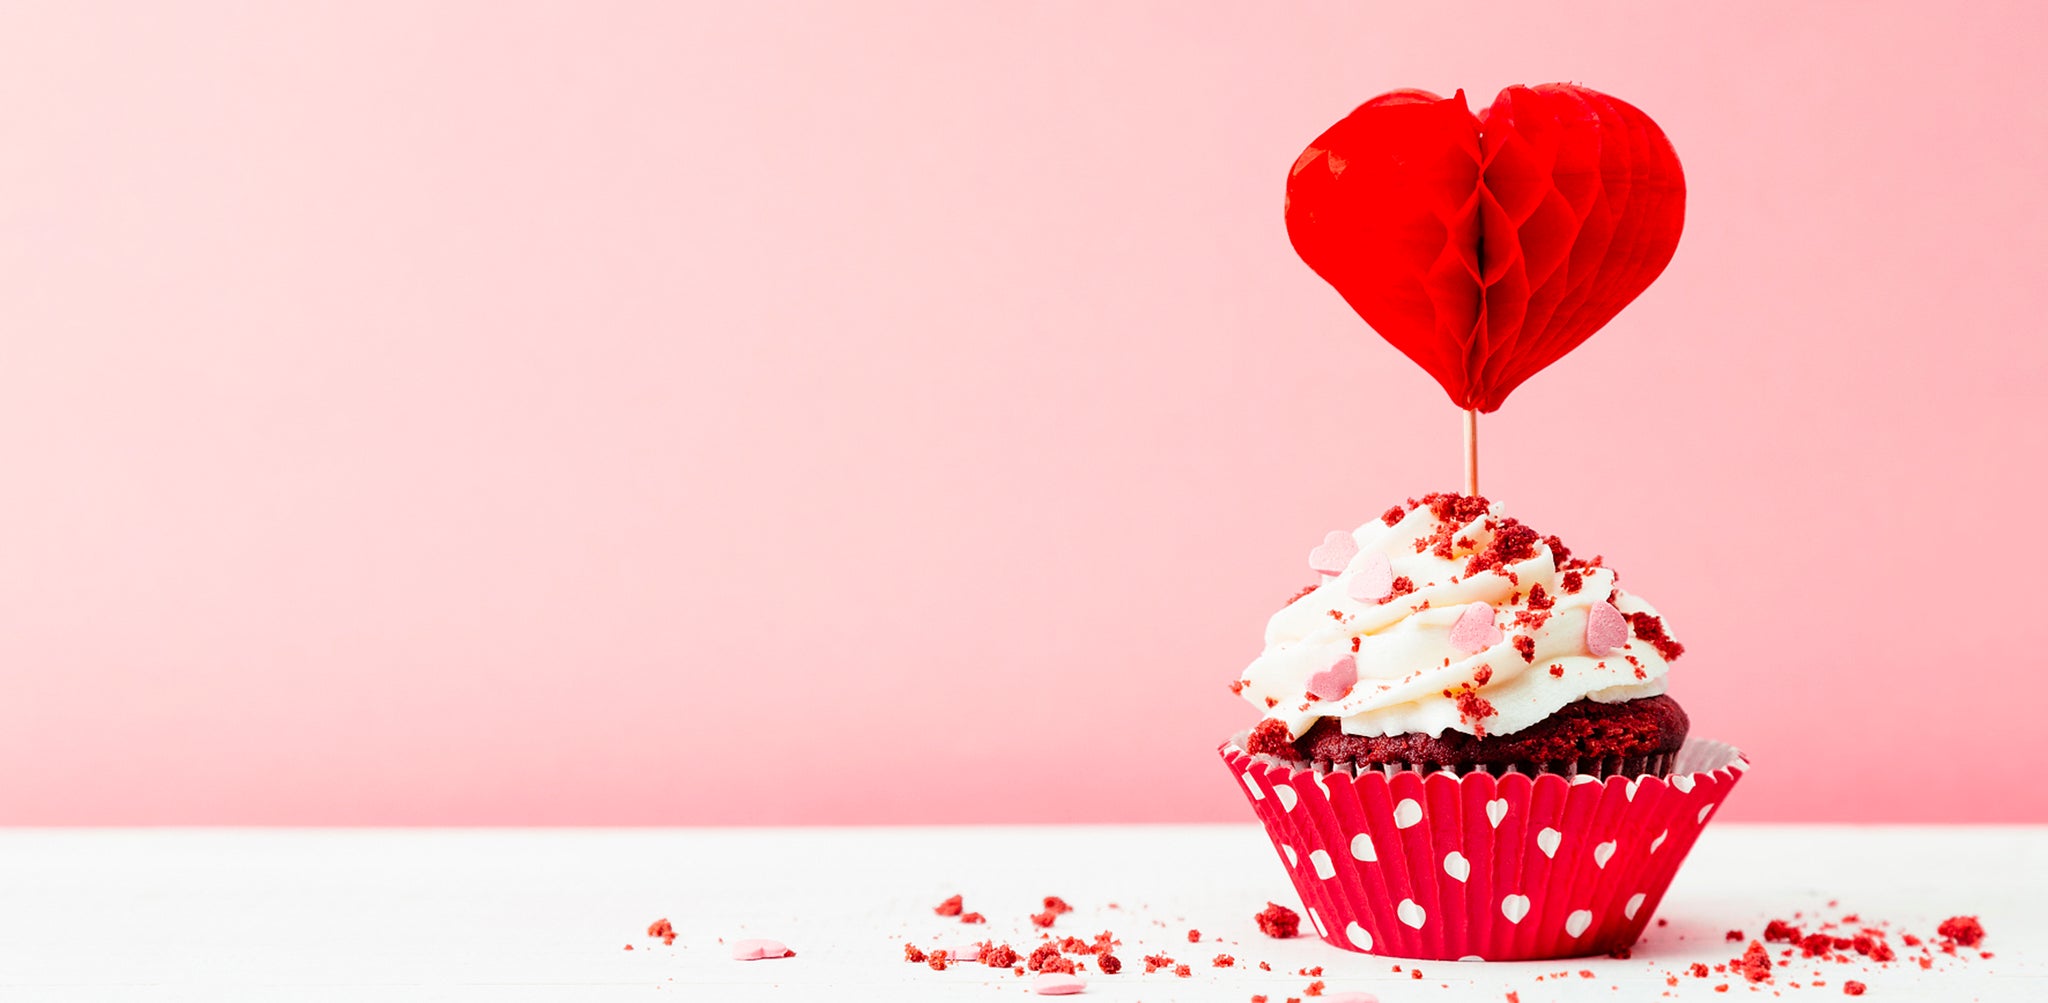 Recipe of Today: Red Velvet Cupcake